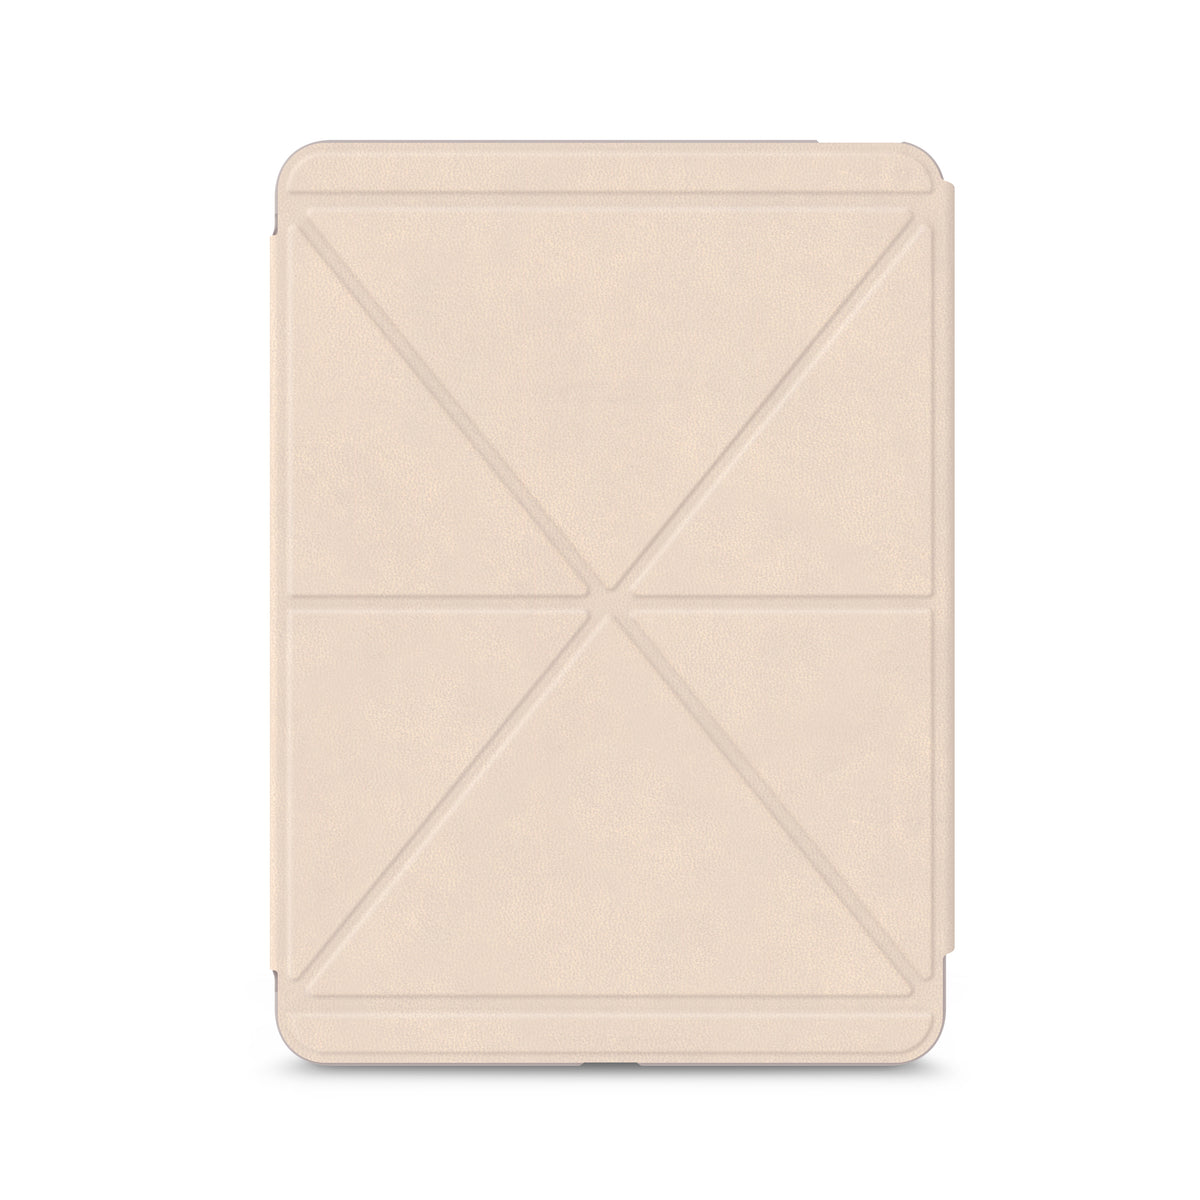 MOSHI Versa Cover for iPad Air 10.9-inch, 4th Gen/iPad Pro 11-inch - Savanna Beige